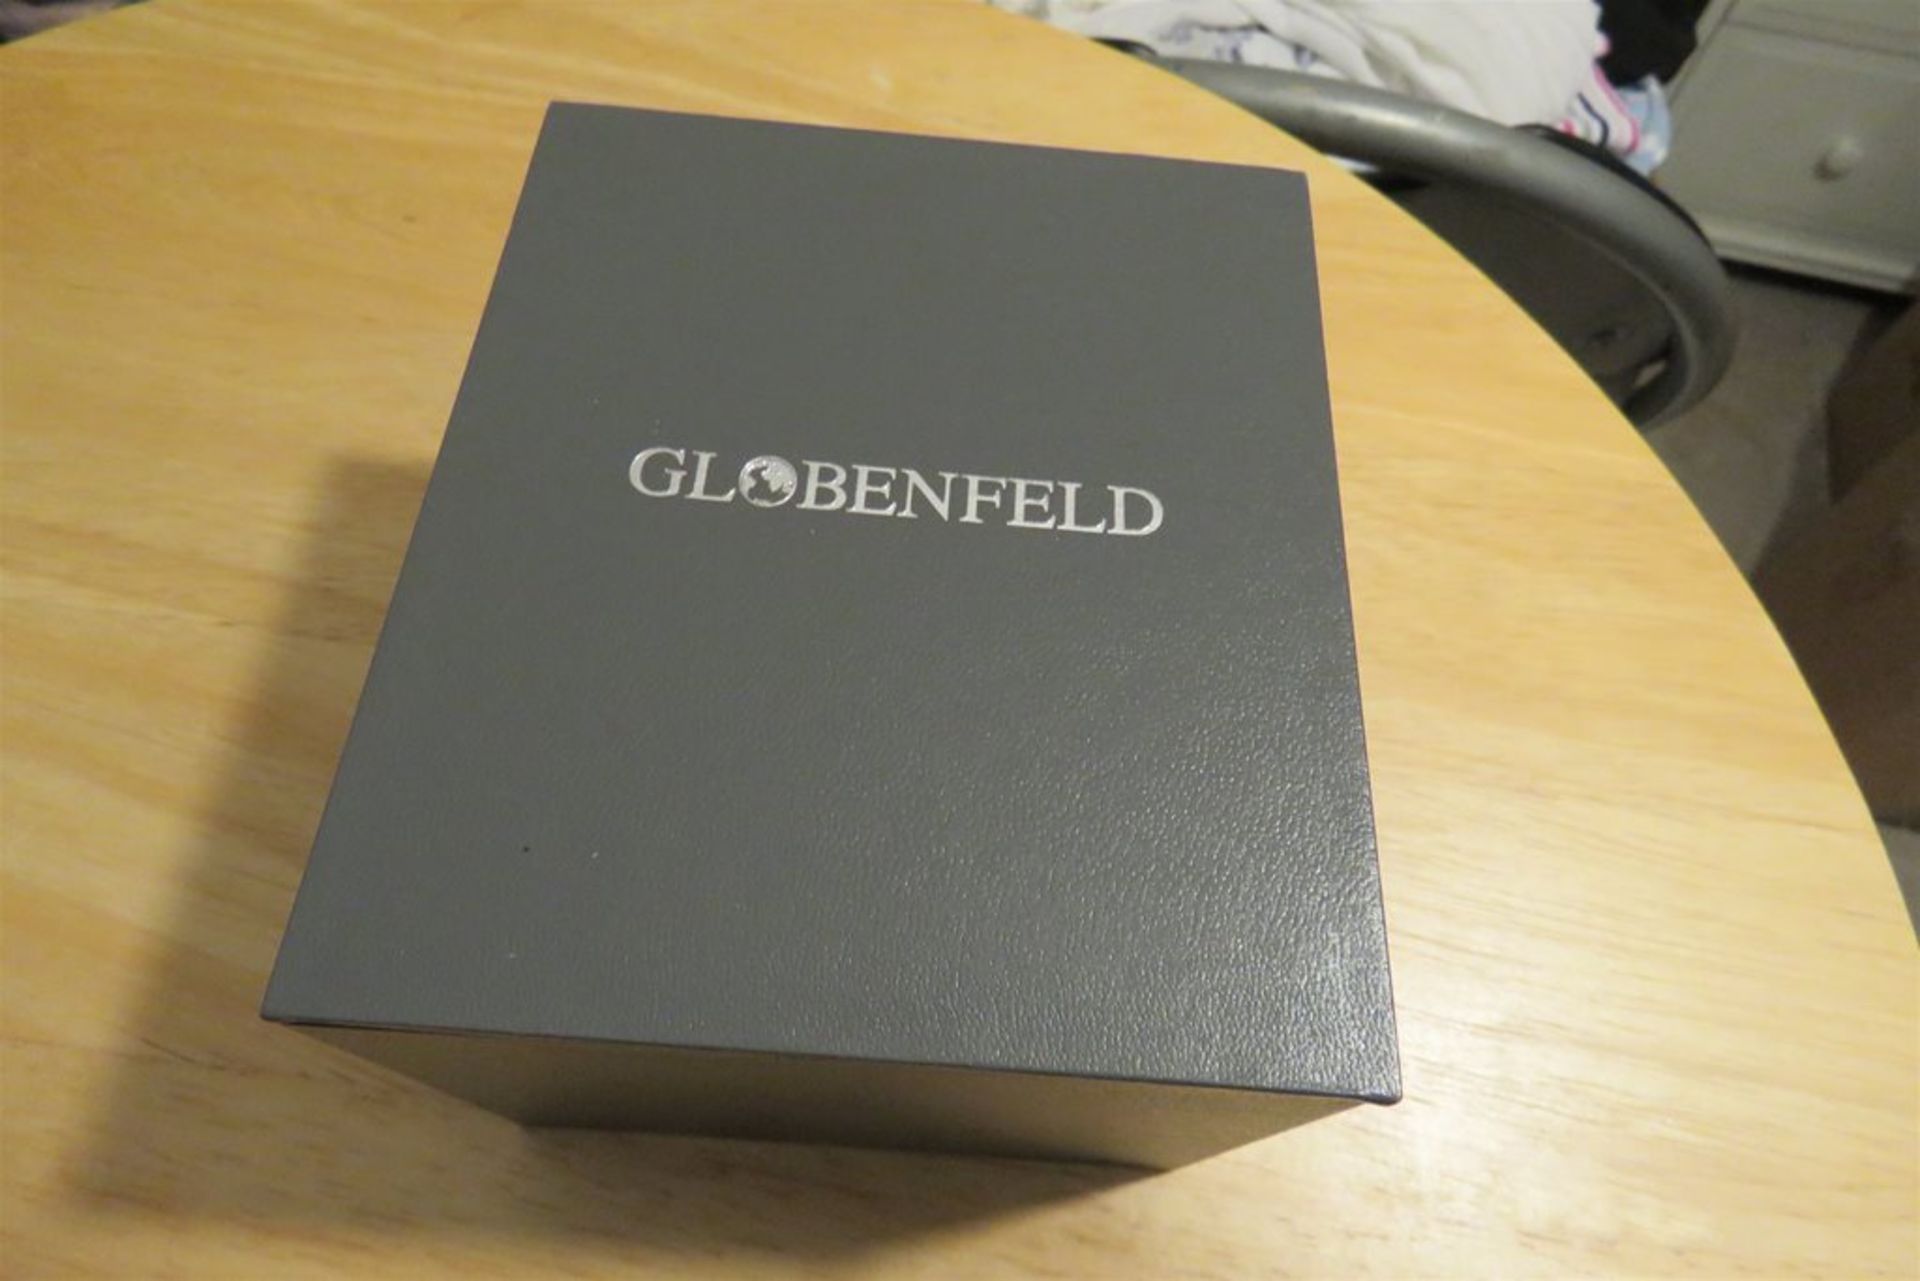 Globenfeld Wrist Watch - Image 3 of 3